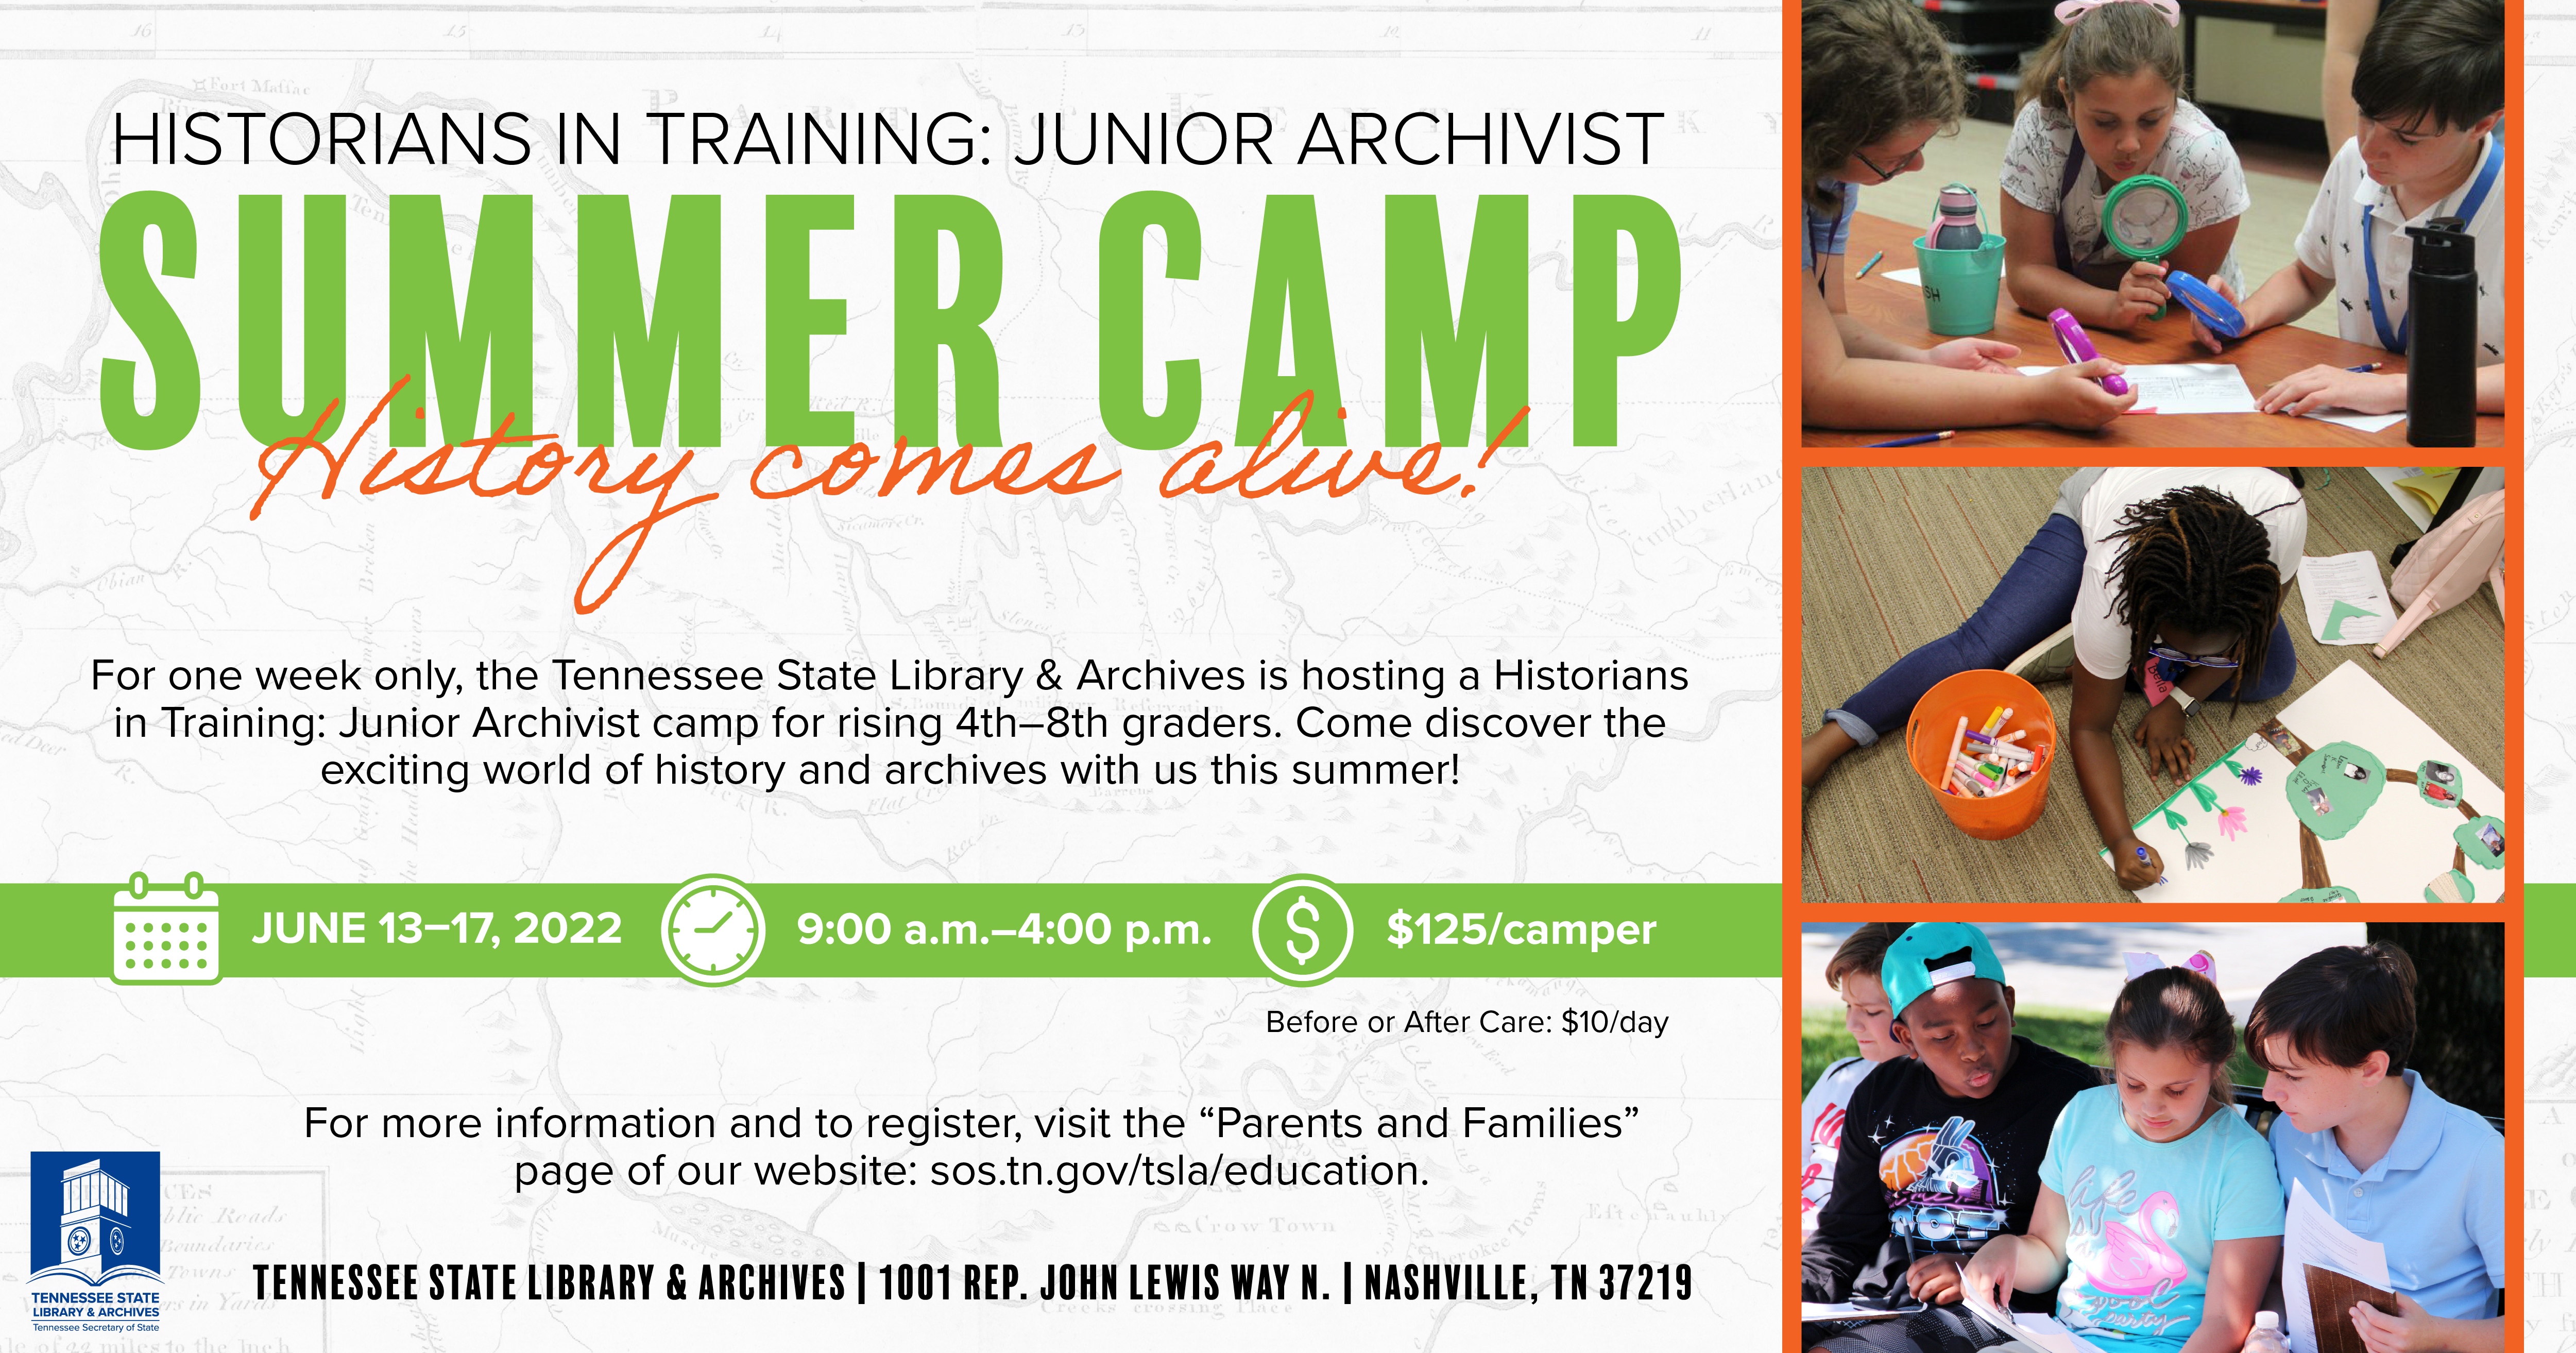 Historians in Training: Junior Archivist Summer Camp